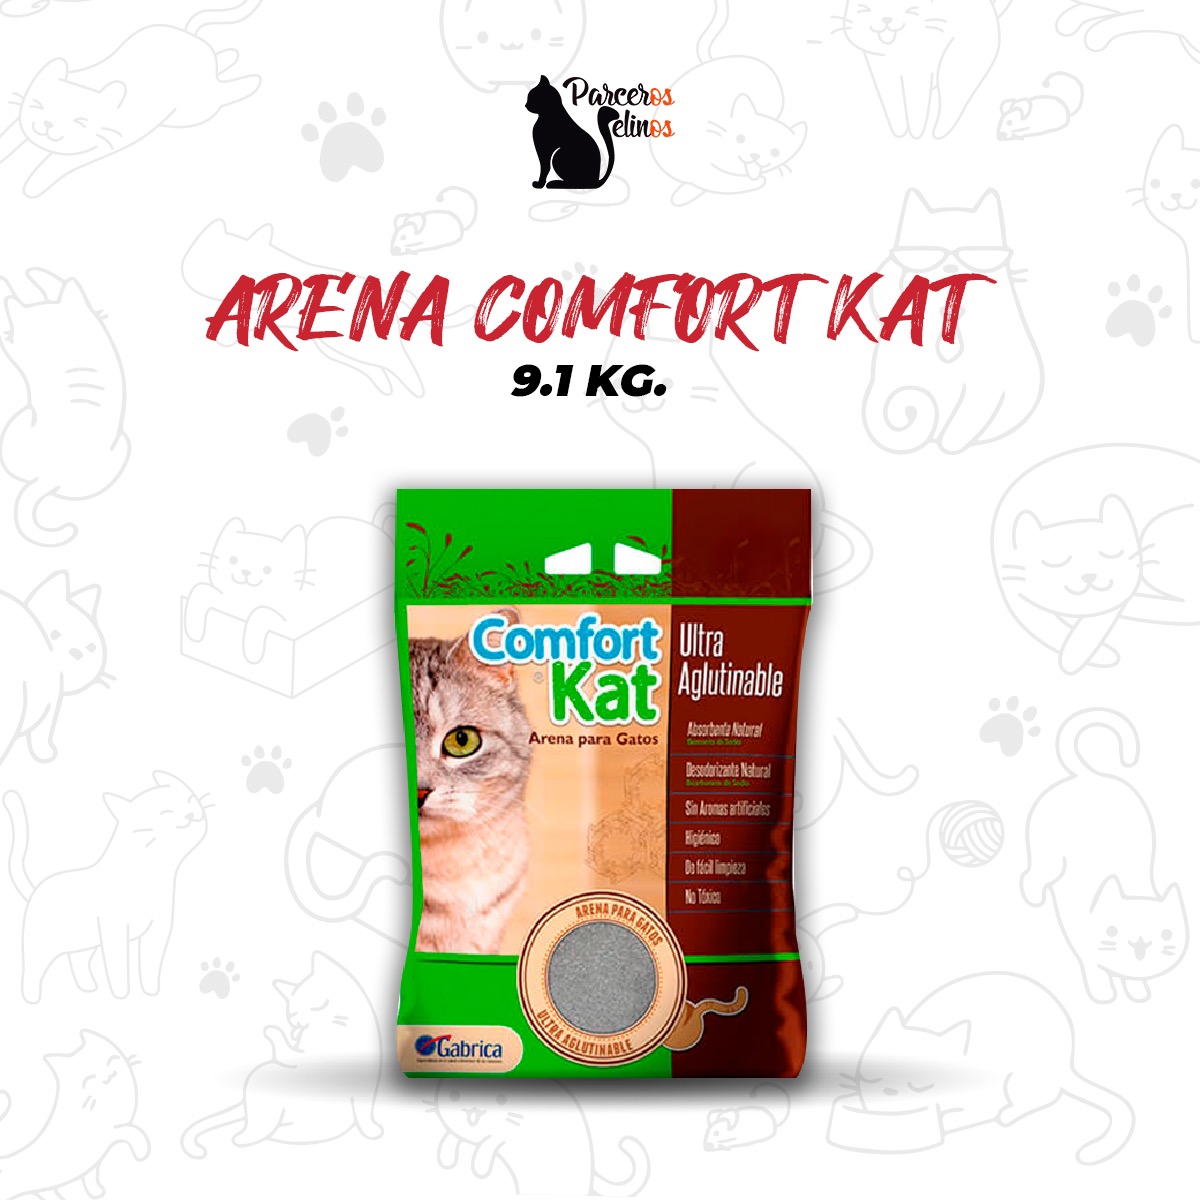 Conform Kat Arena para Gato 9,1kg